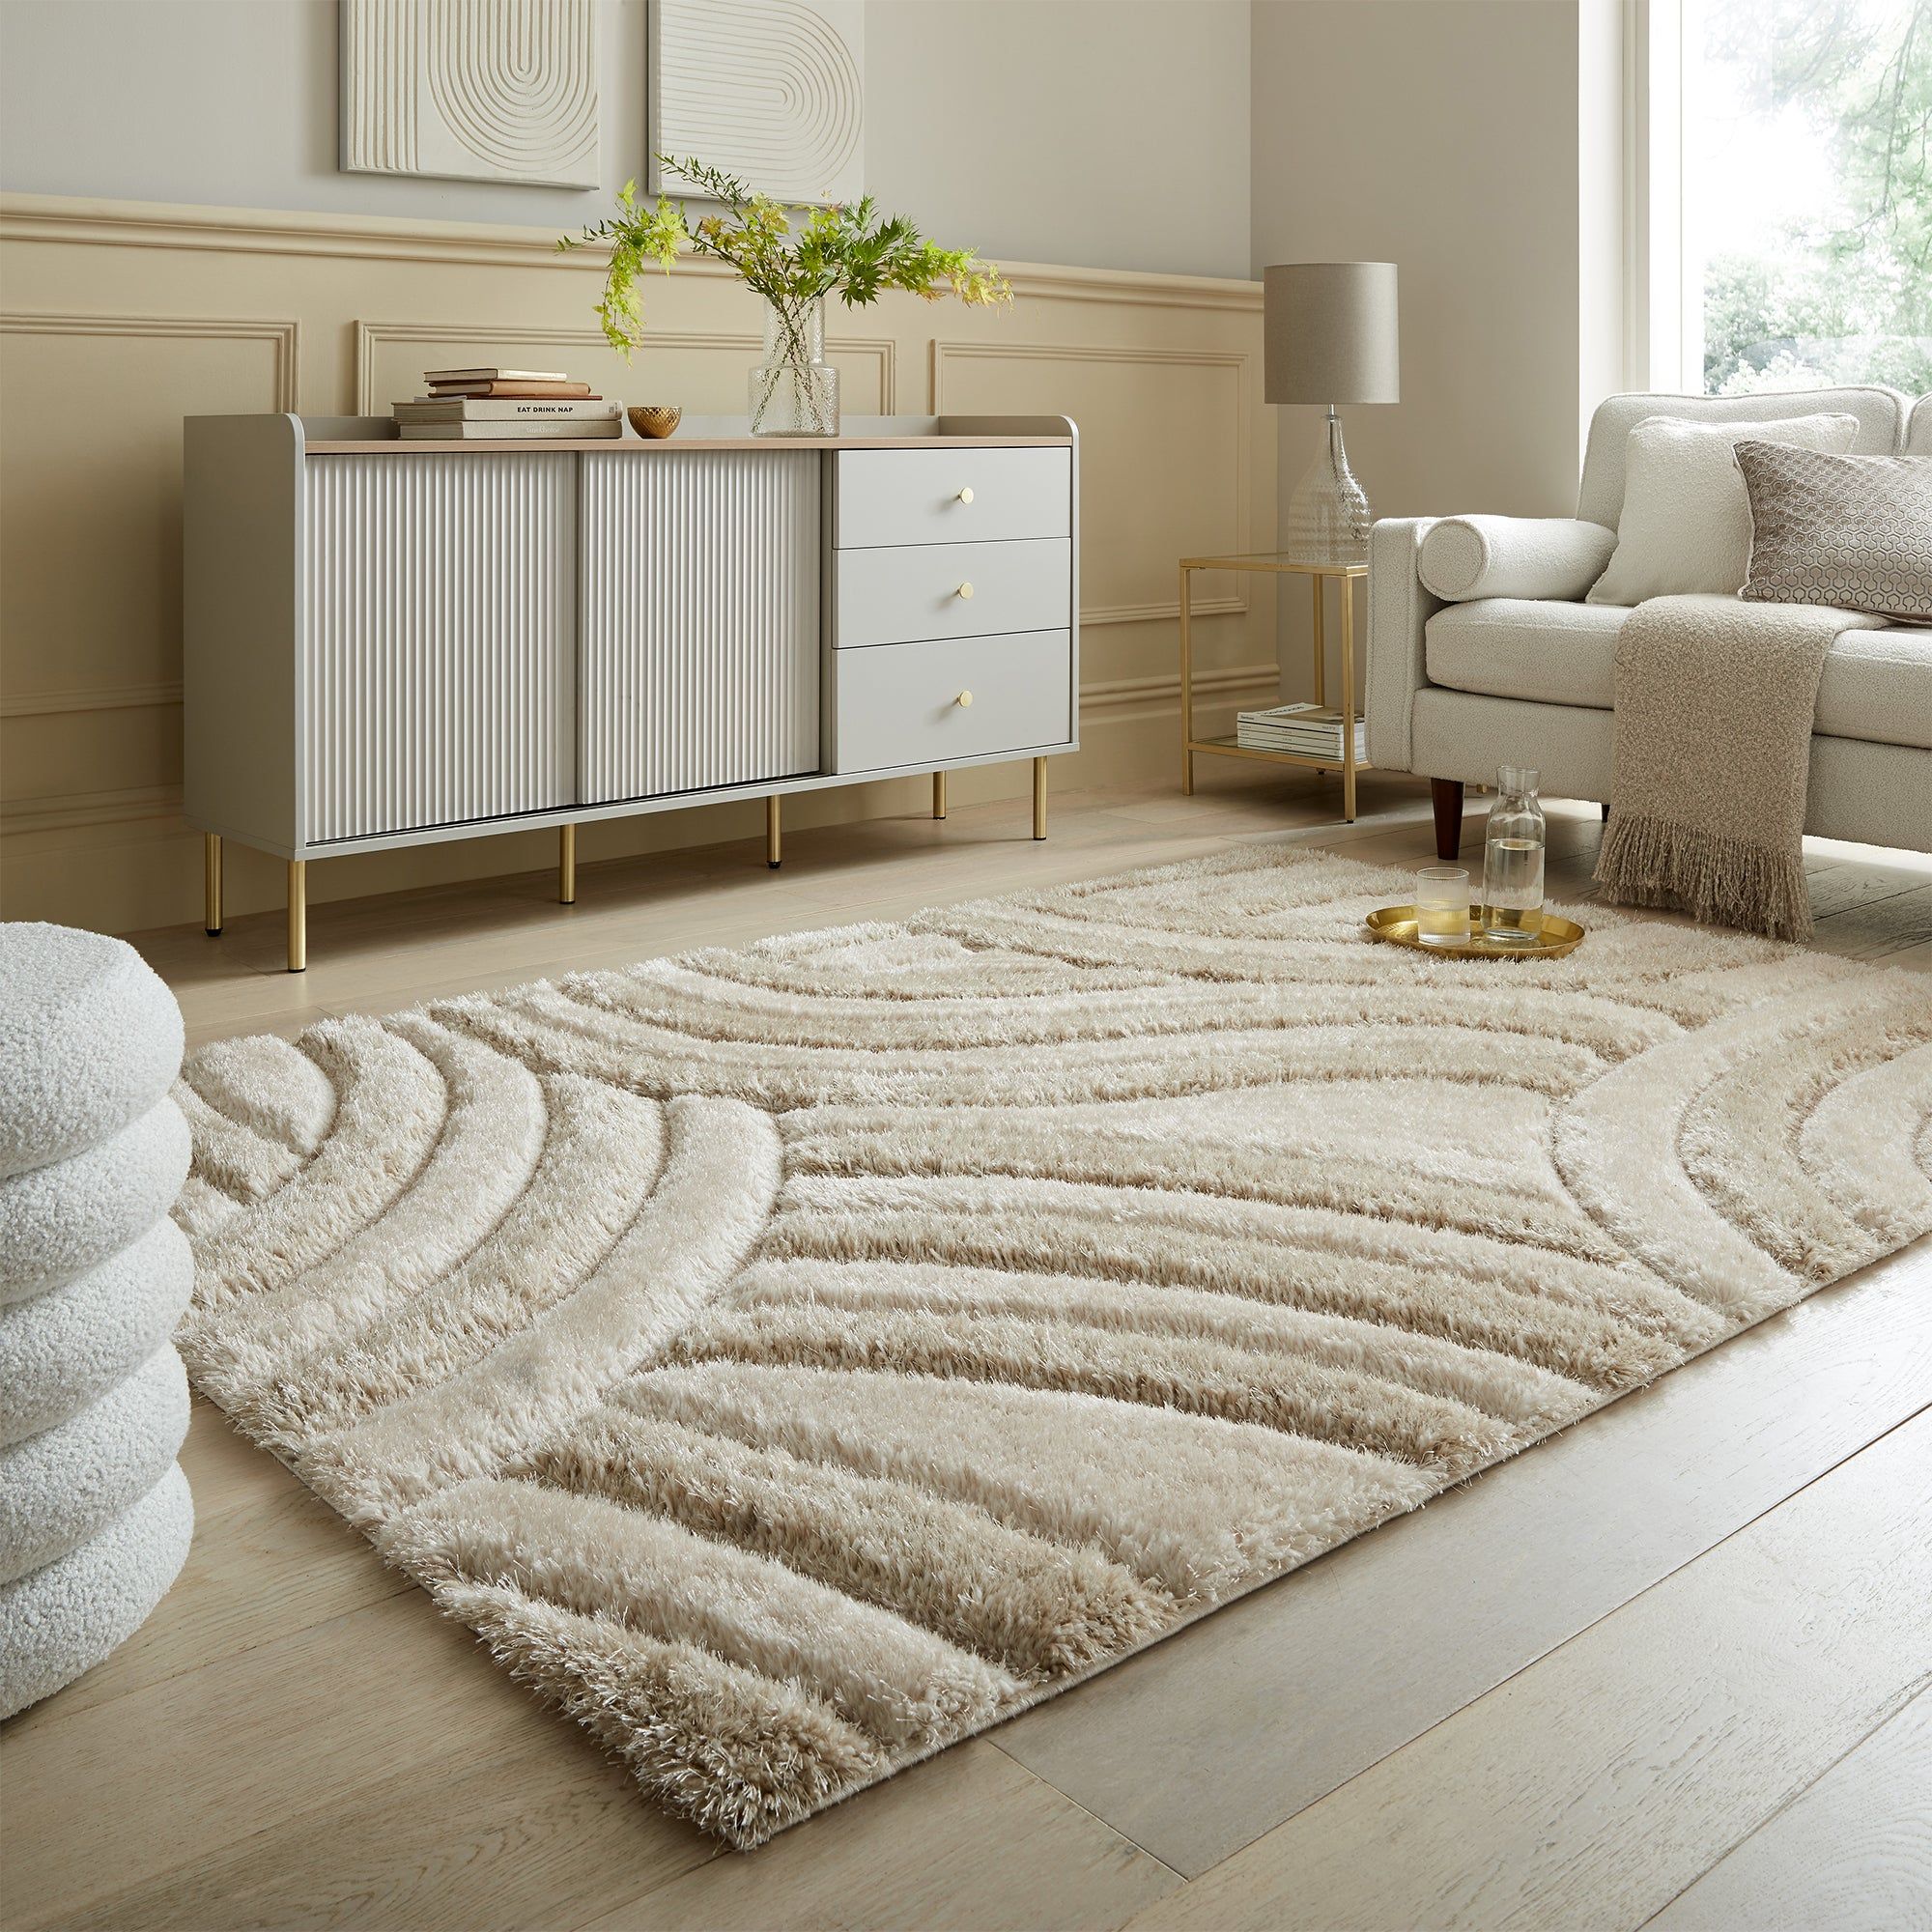 Stylish and Cozy Living Room Rug Inspiration